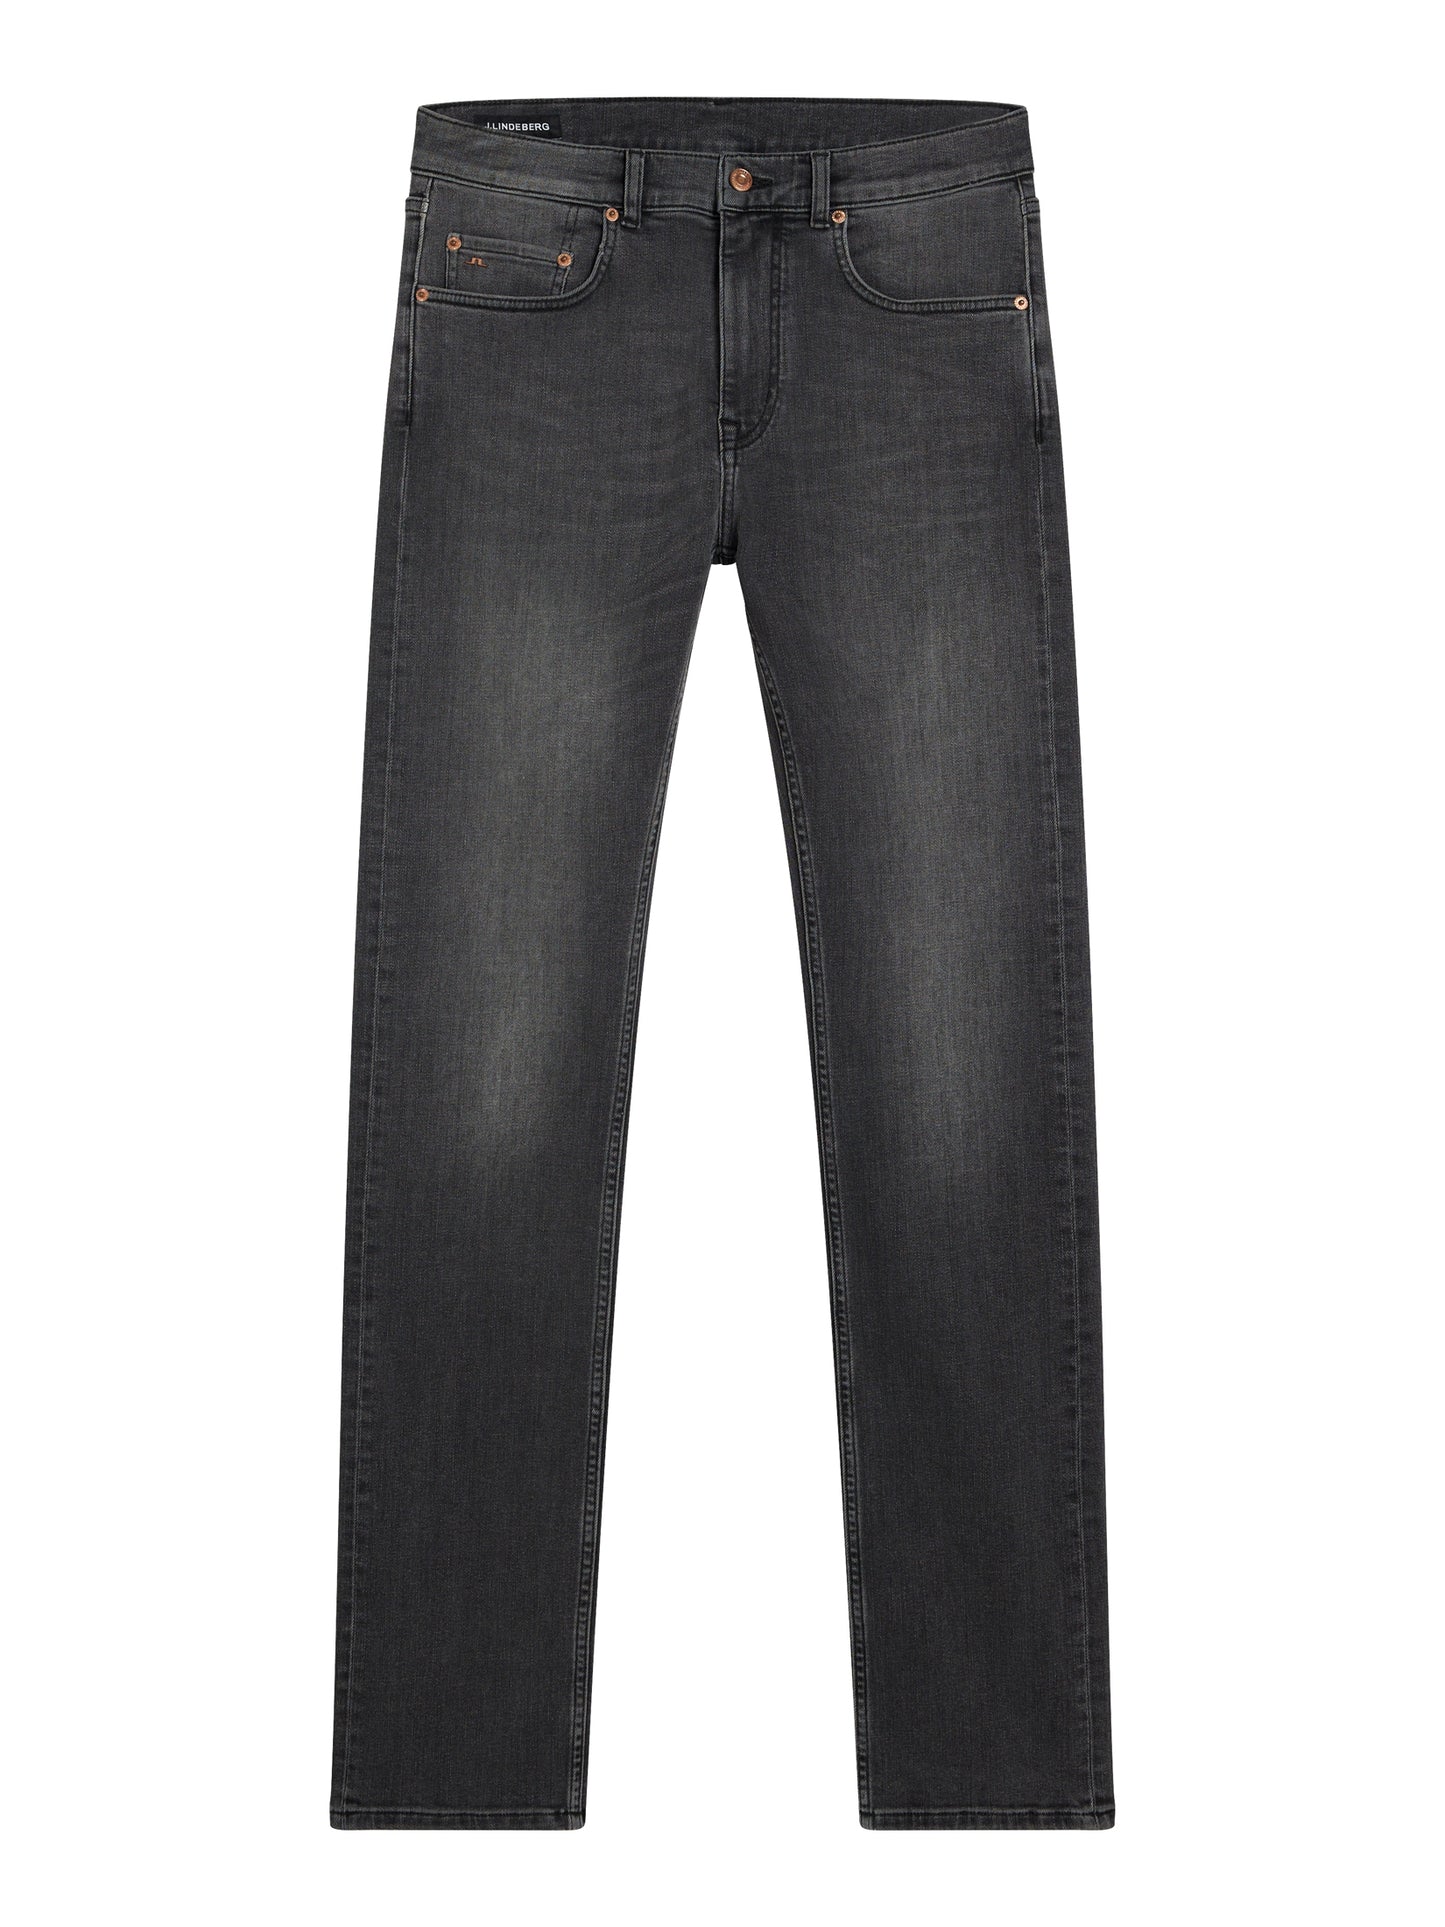 Cedar Slate Wash Jeans / Granite Gray